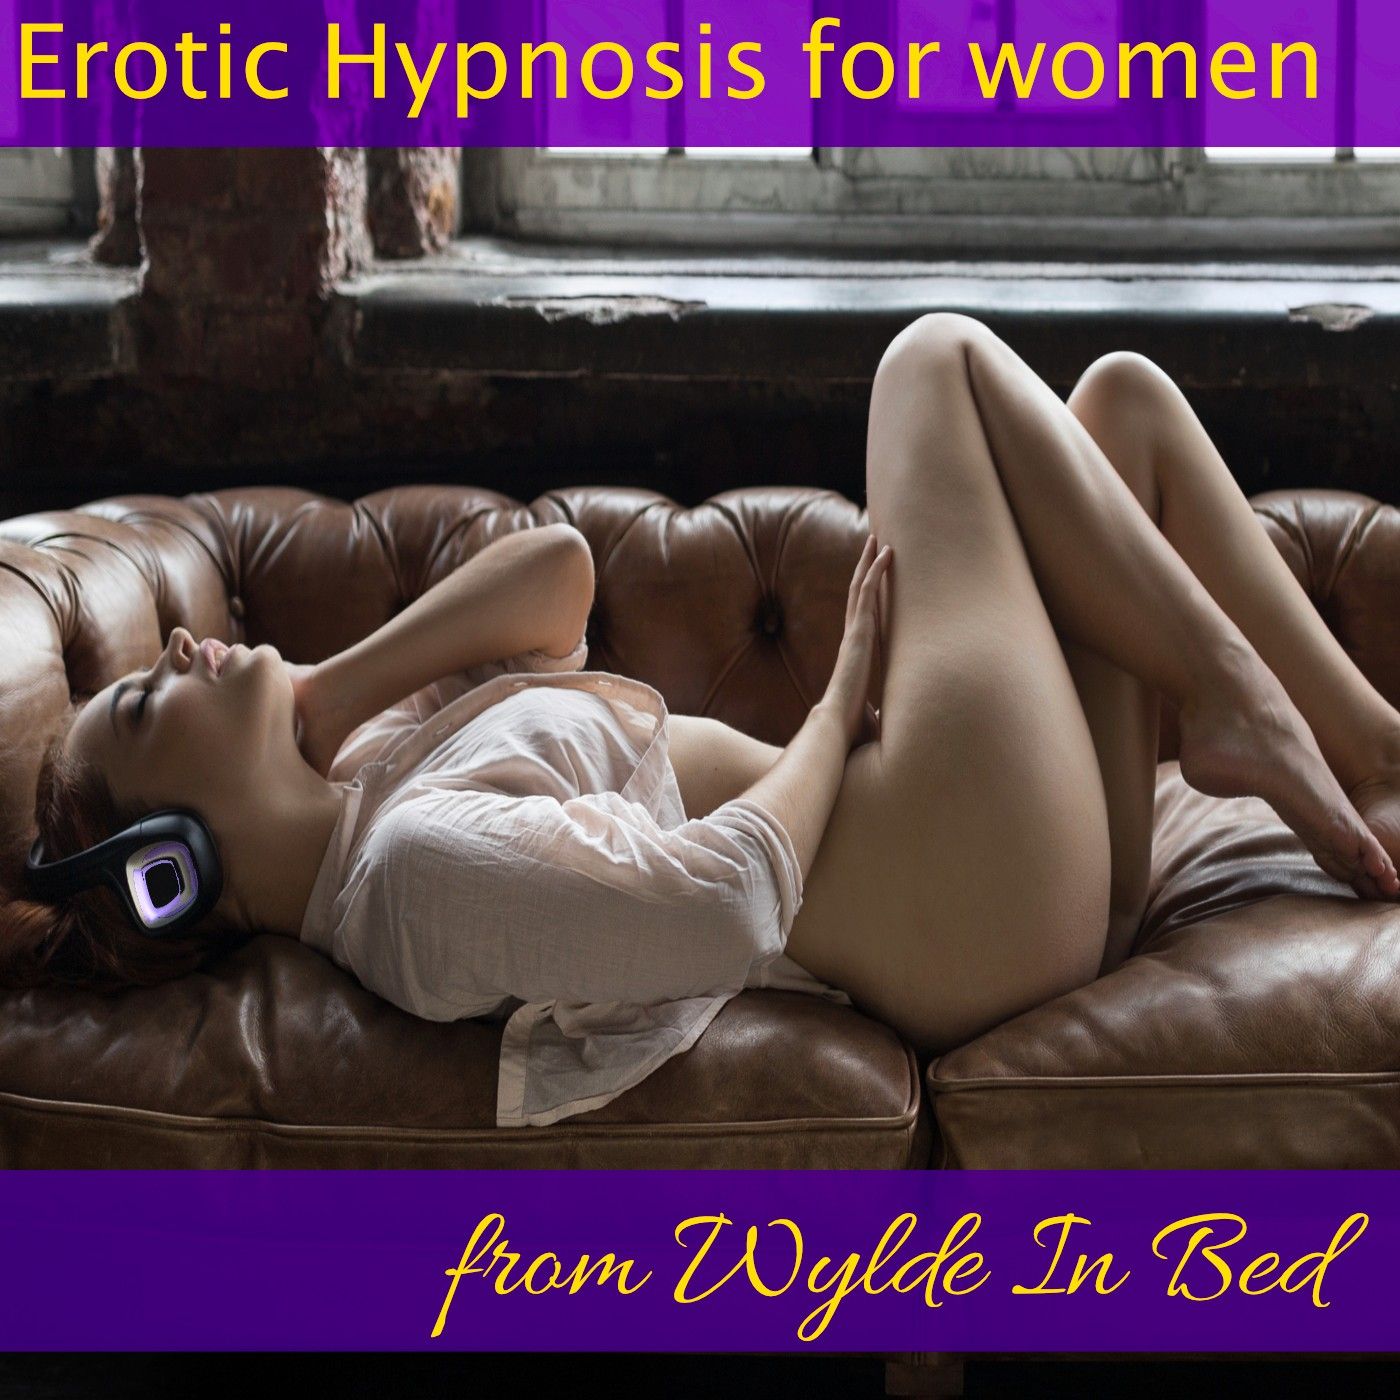 Hypno erotic story